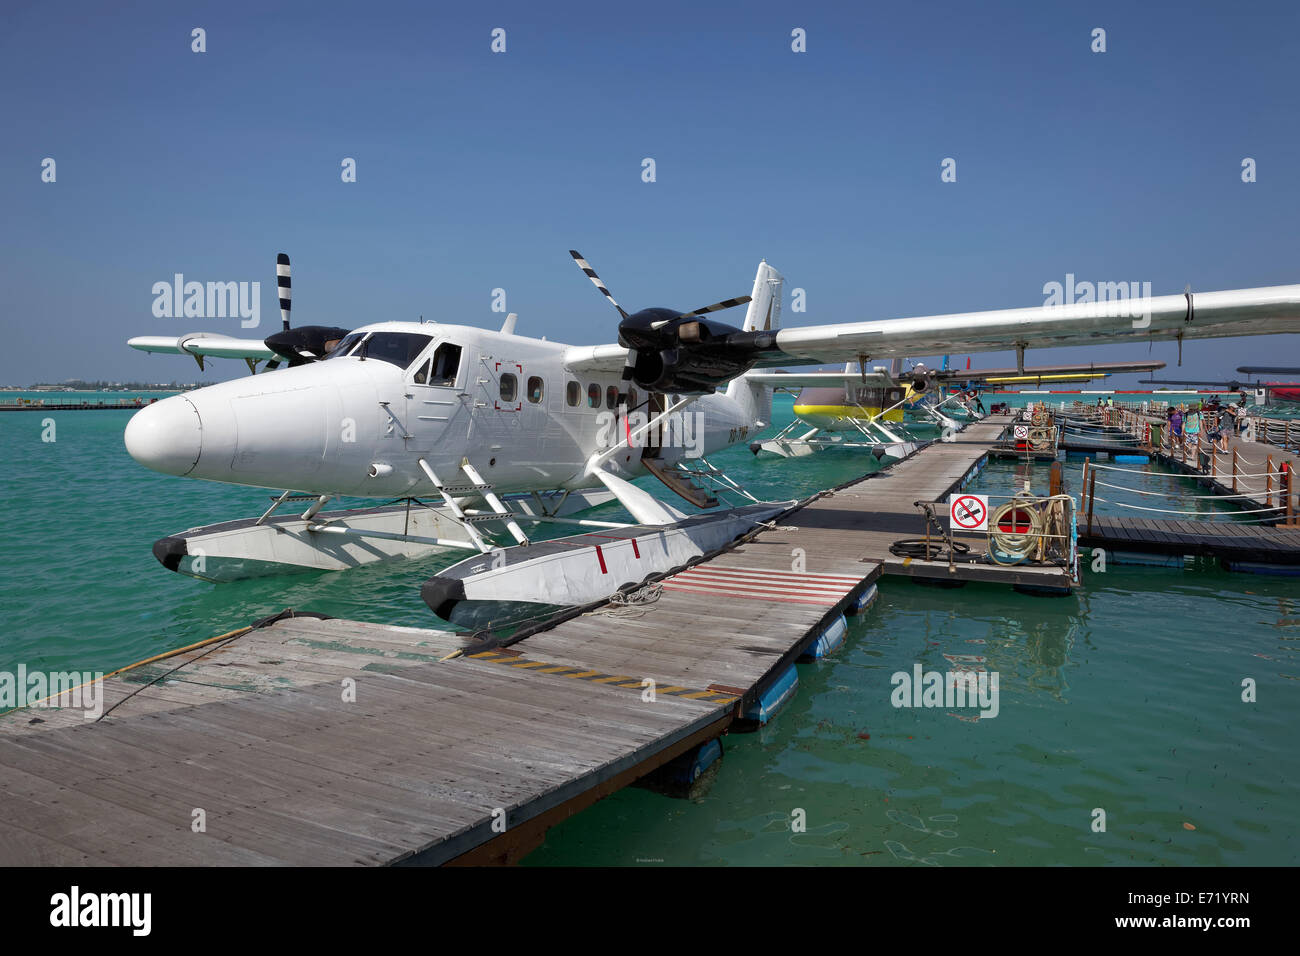 Wasserflugzeug, De Havilland Canada DHC-6 300 Twin Otter, festgemacht an den Ponton, Malé International Airport, Hulhulé, Malediven Stockfoto